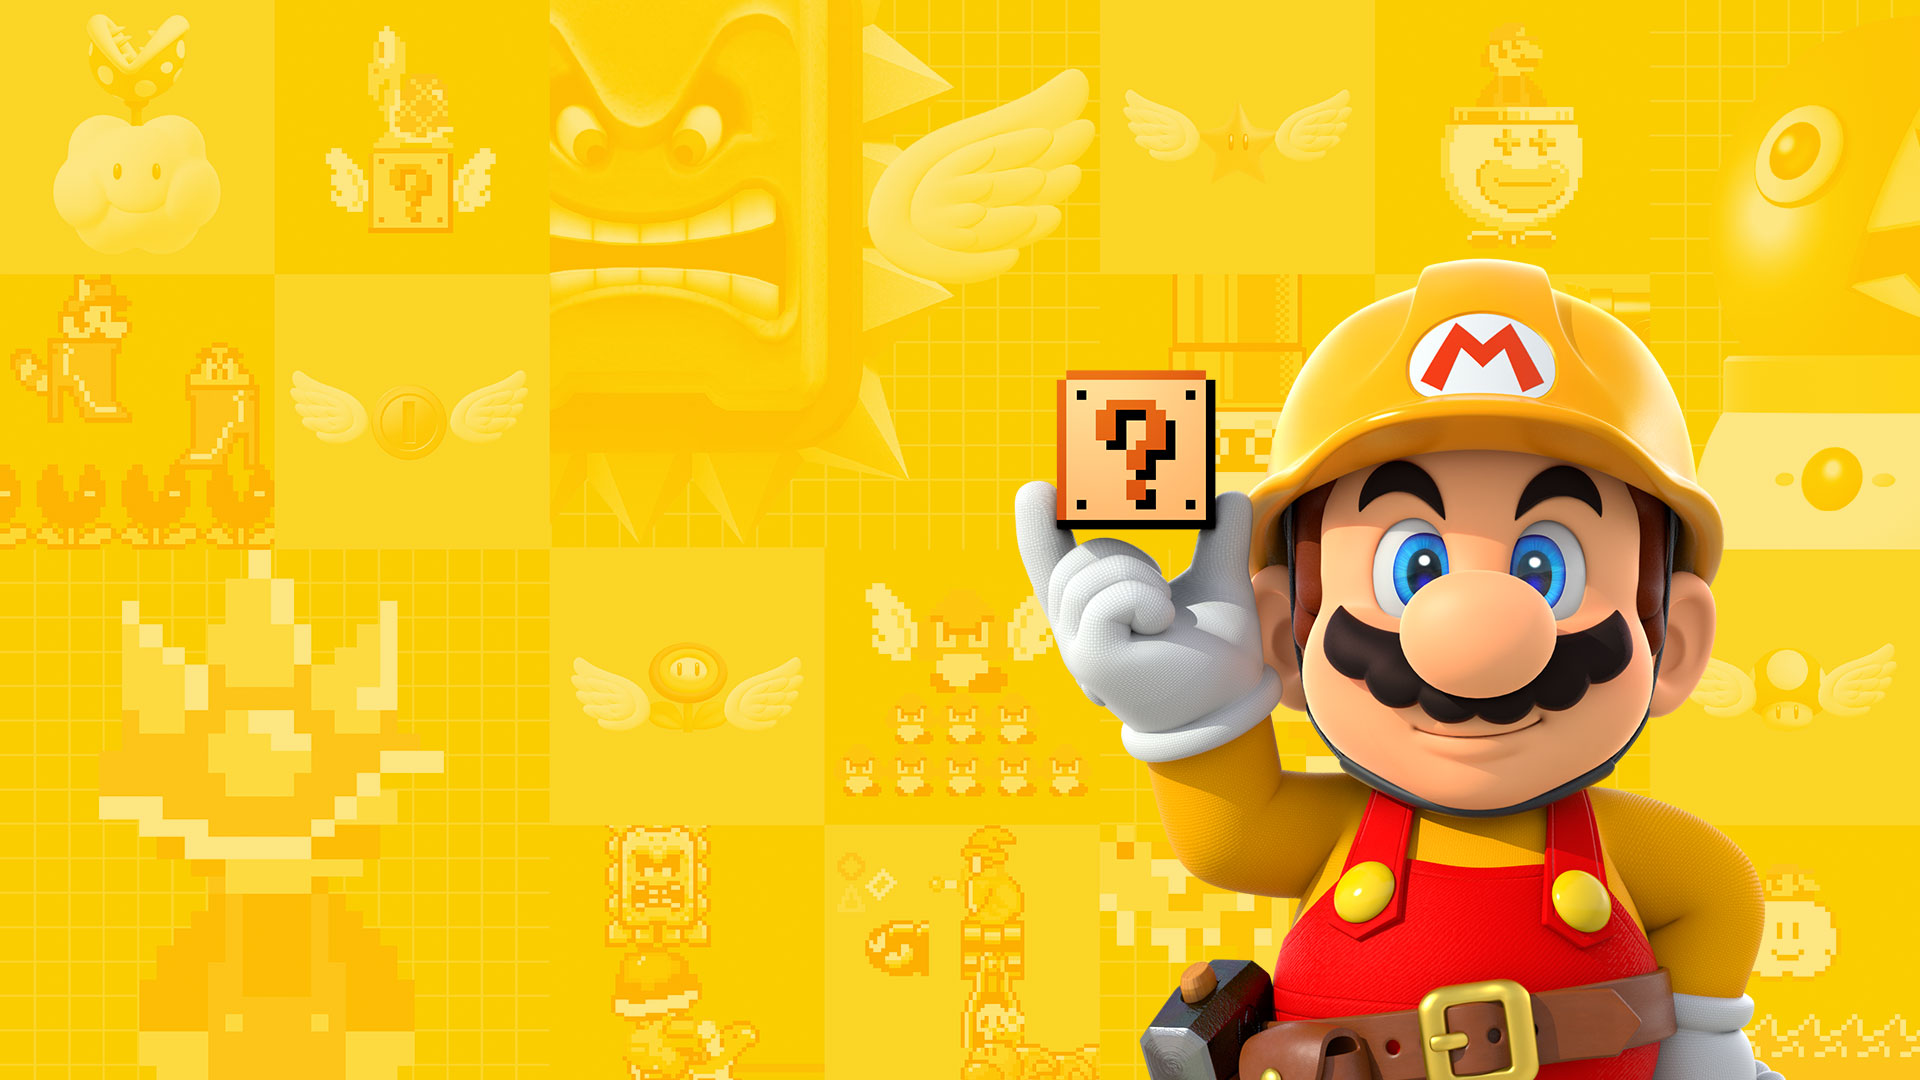 General 1920x1080 Super Mario Mario Bros. video games video game art yellow yellow background